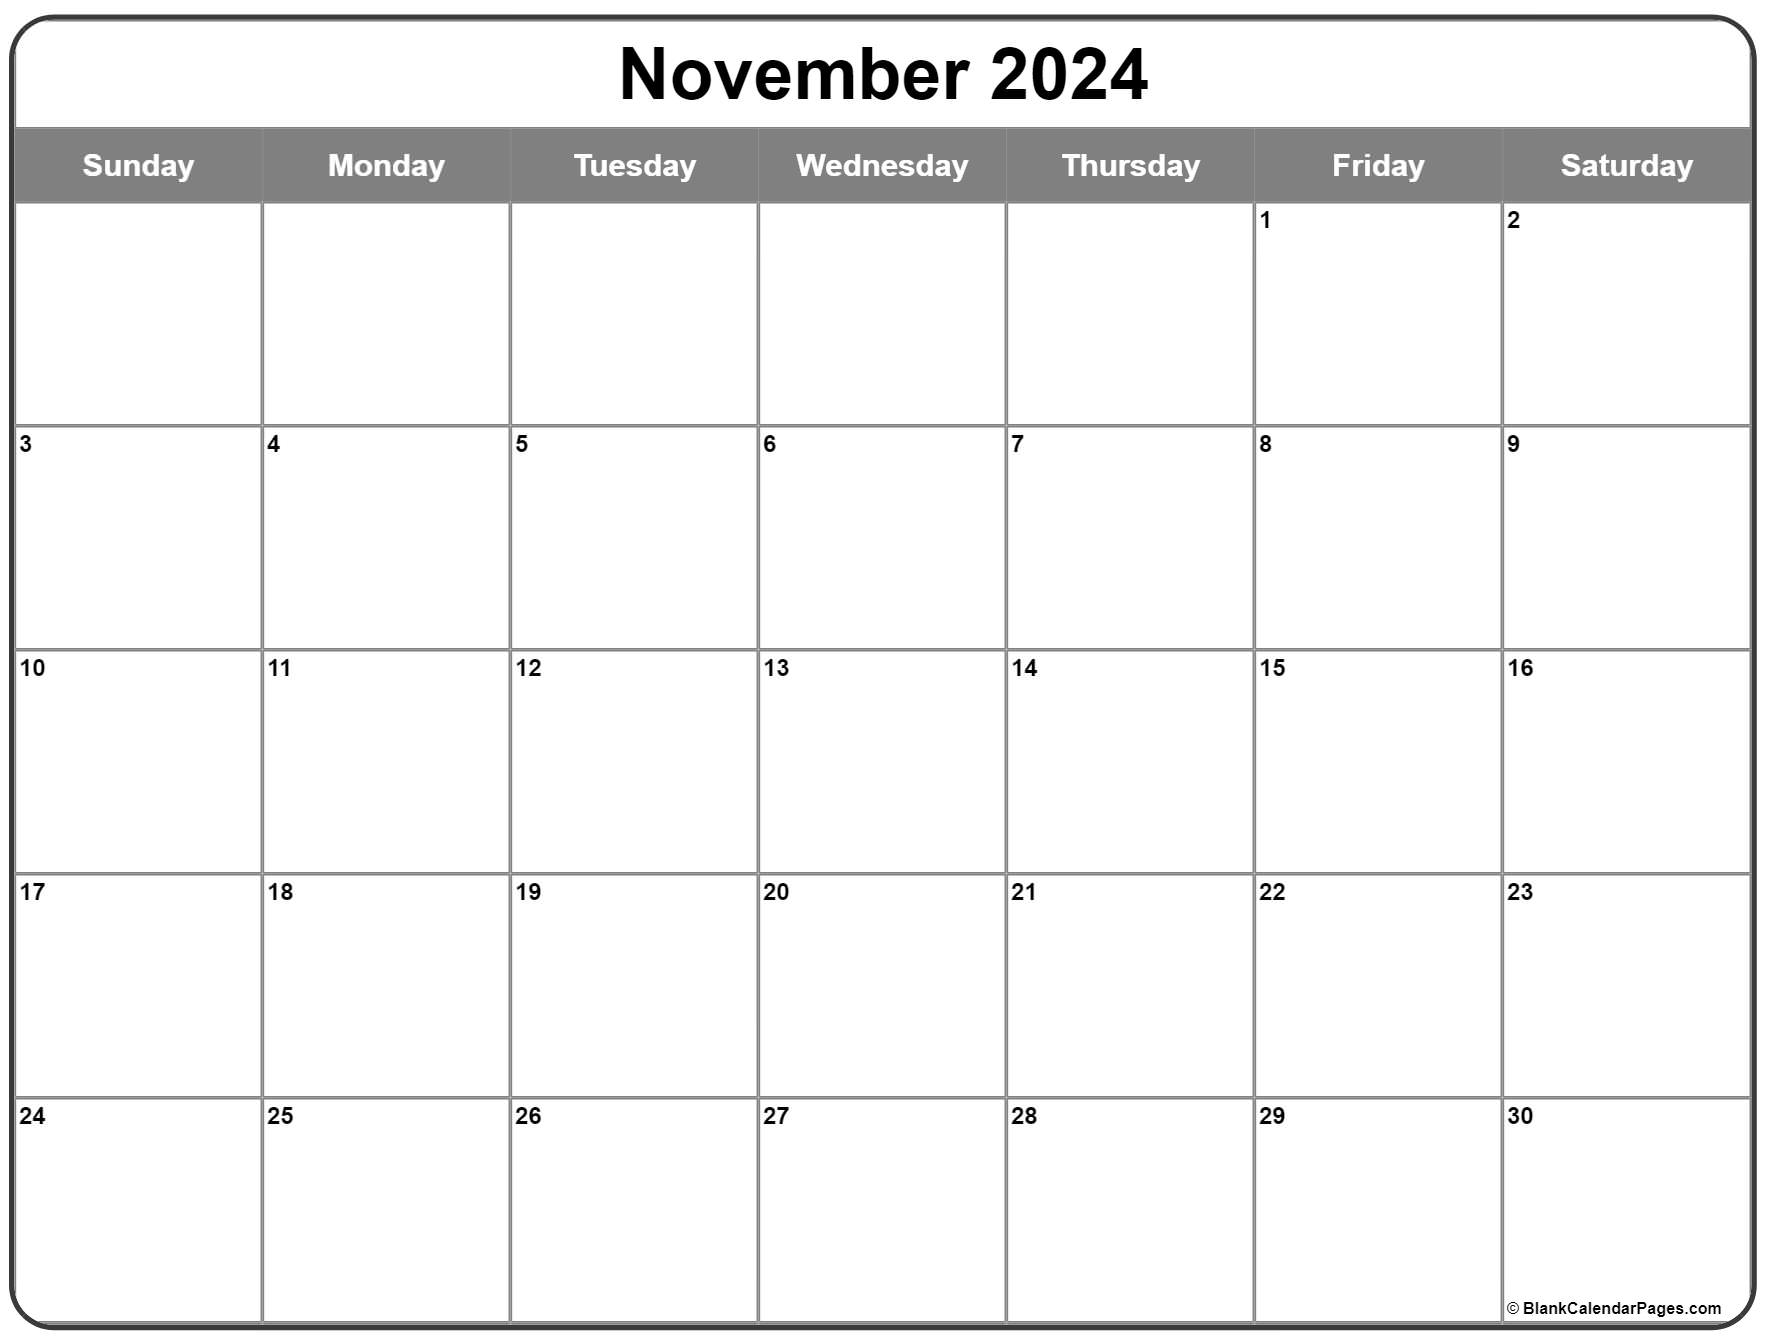 November 2022 calendar | free printable calendar